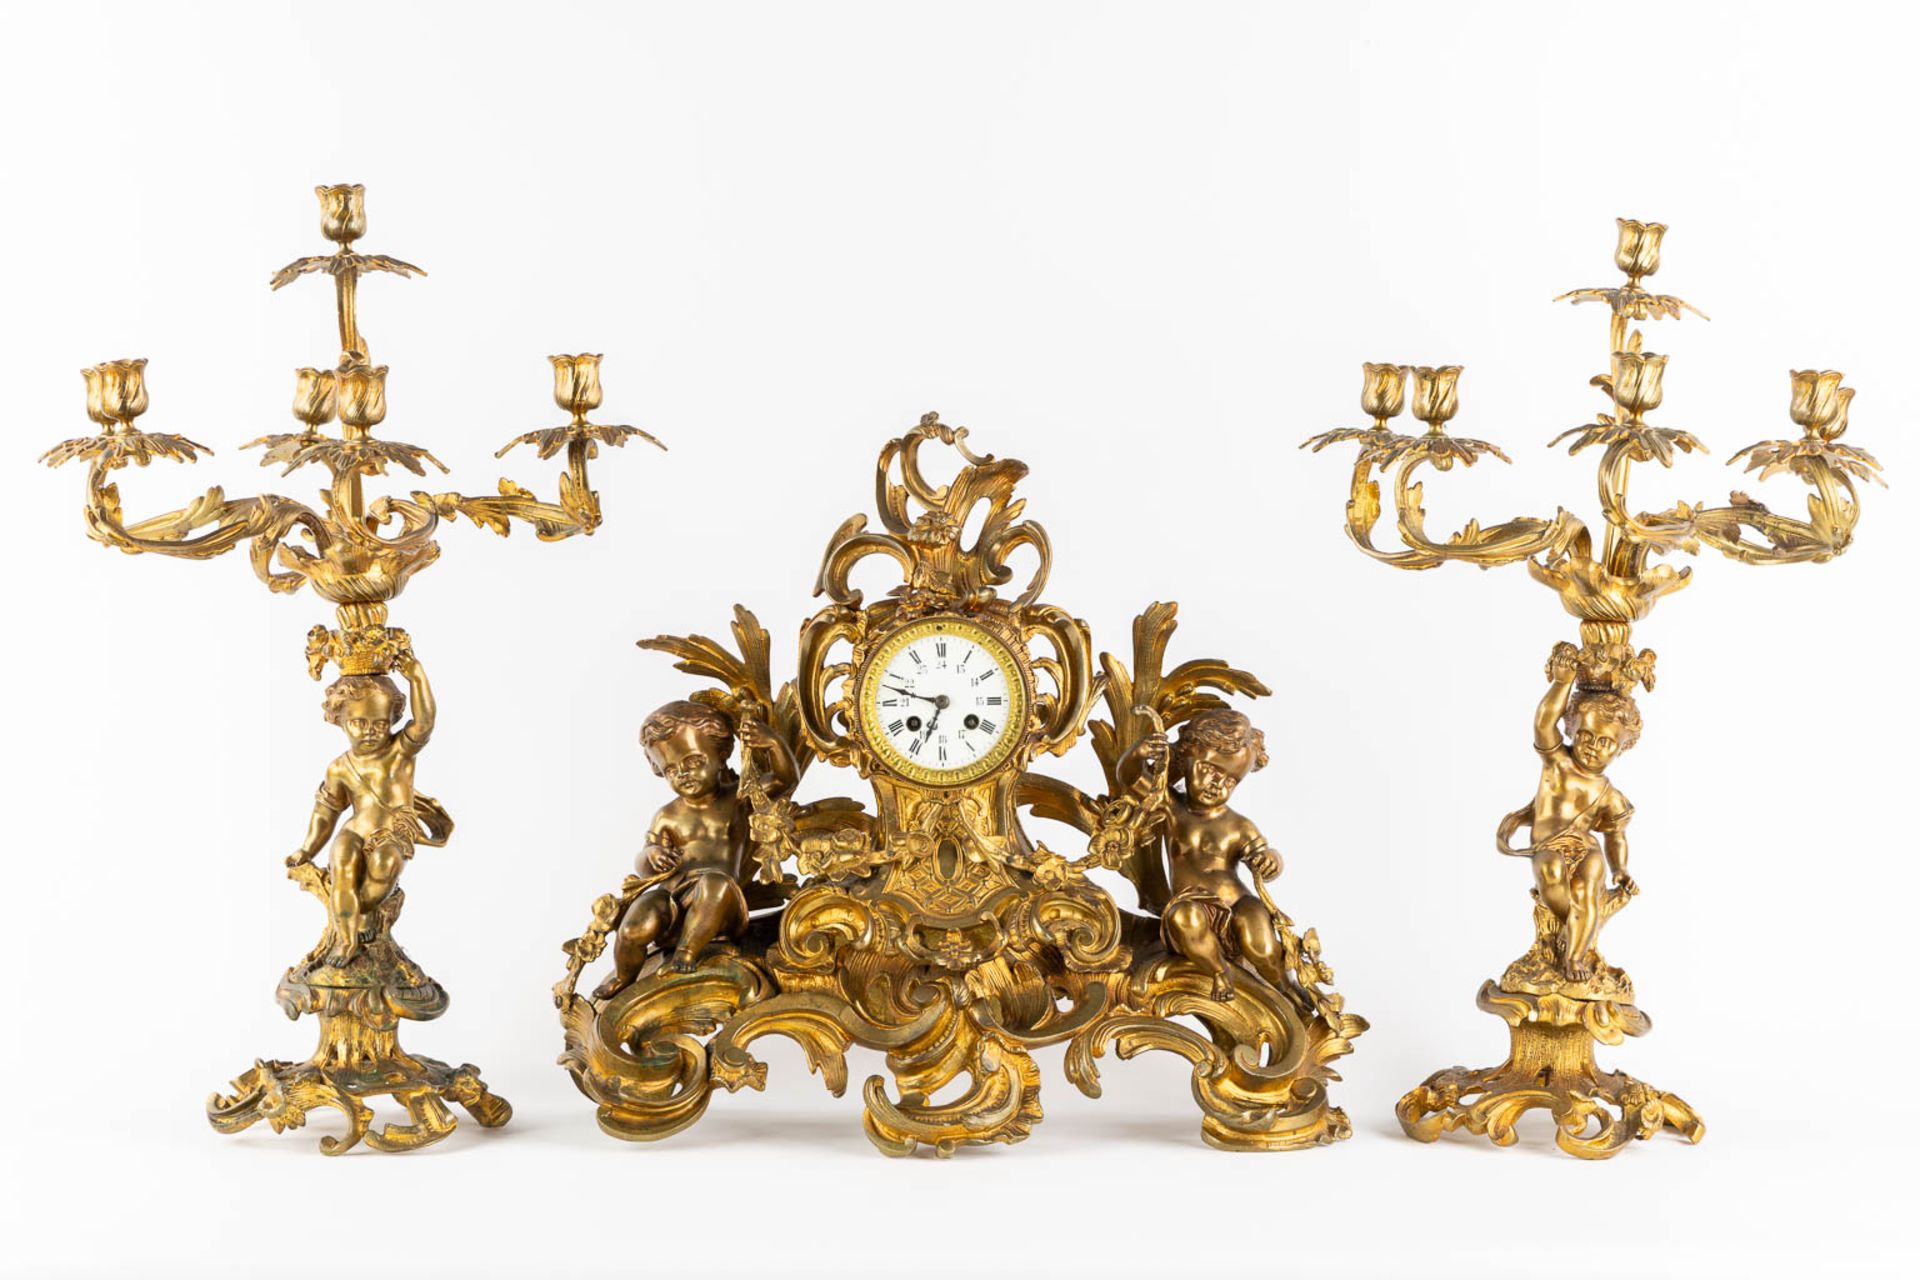 A three-piece mantle garniture clock and candelabra, gilt bronze. 19th C. (L:21 x W:55 x H:48 cm) - Image 3 of 16